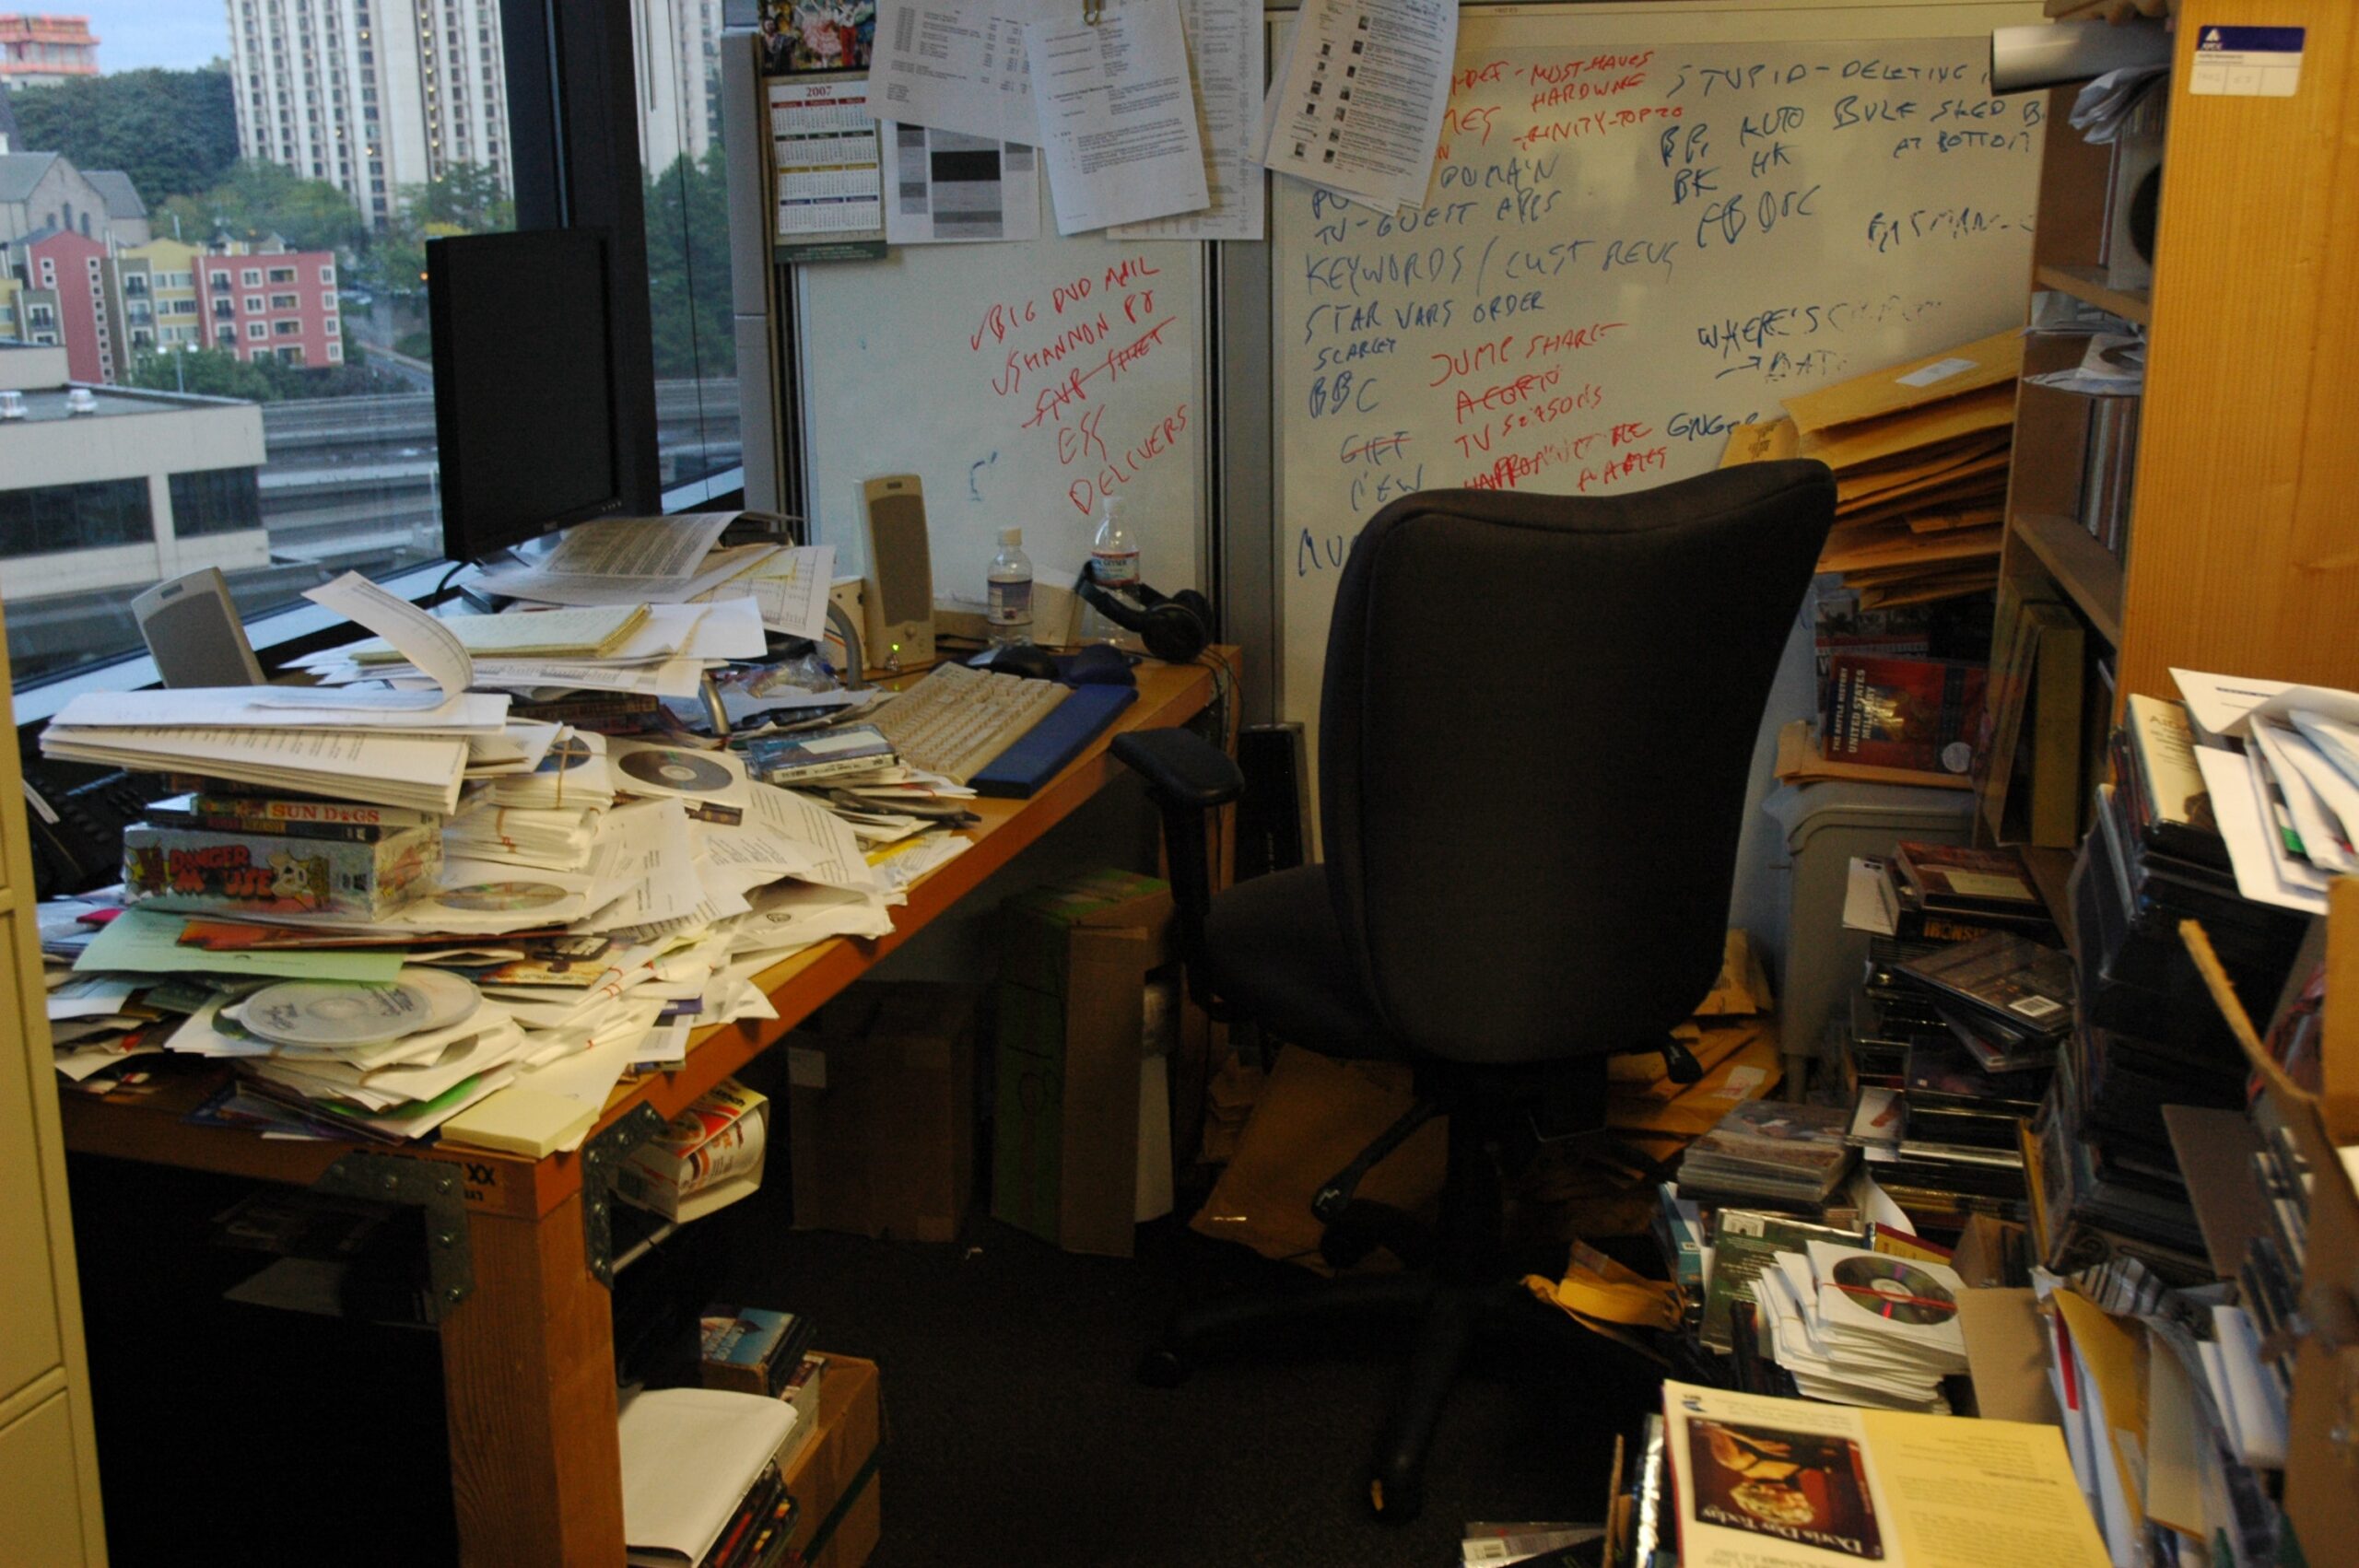 Disorganized?